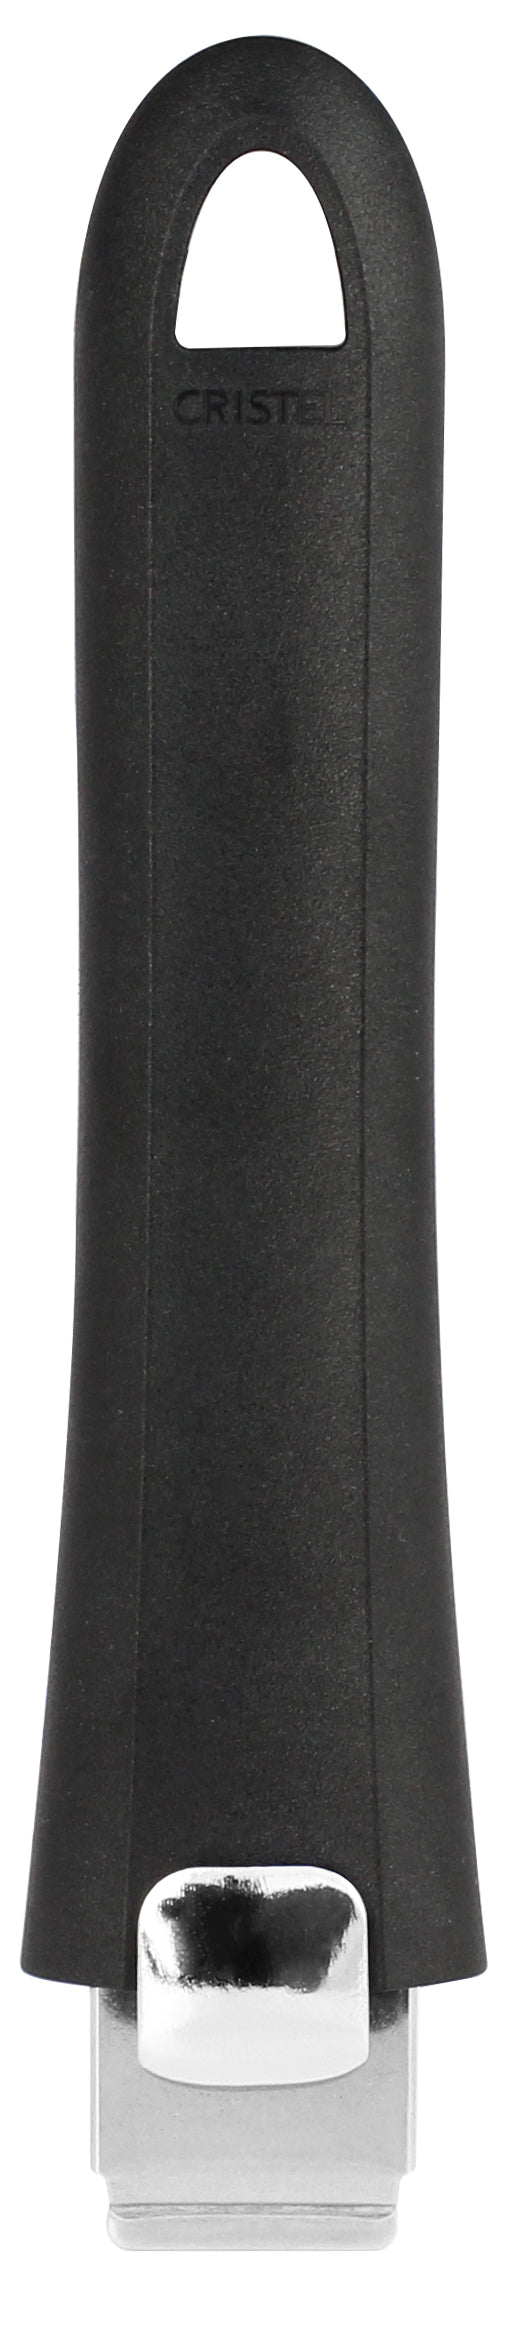 Poignée Mutine amovible noir | CRISTEL